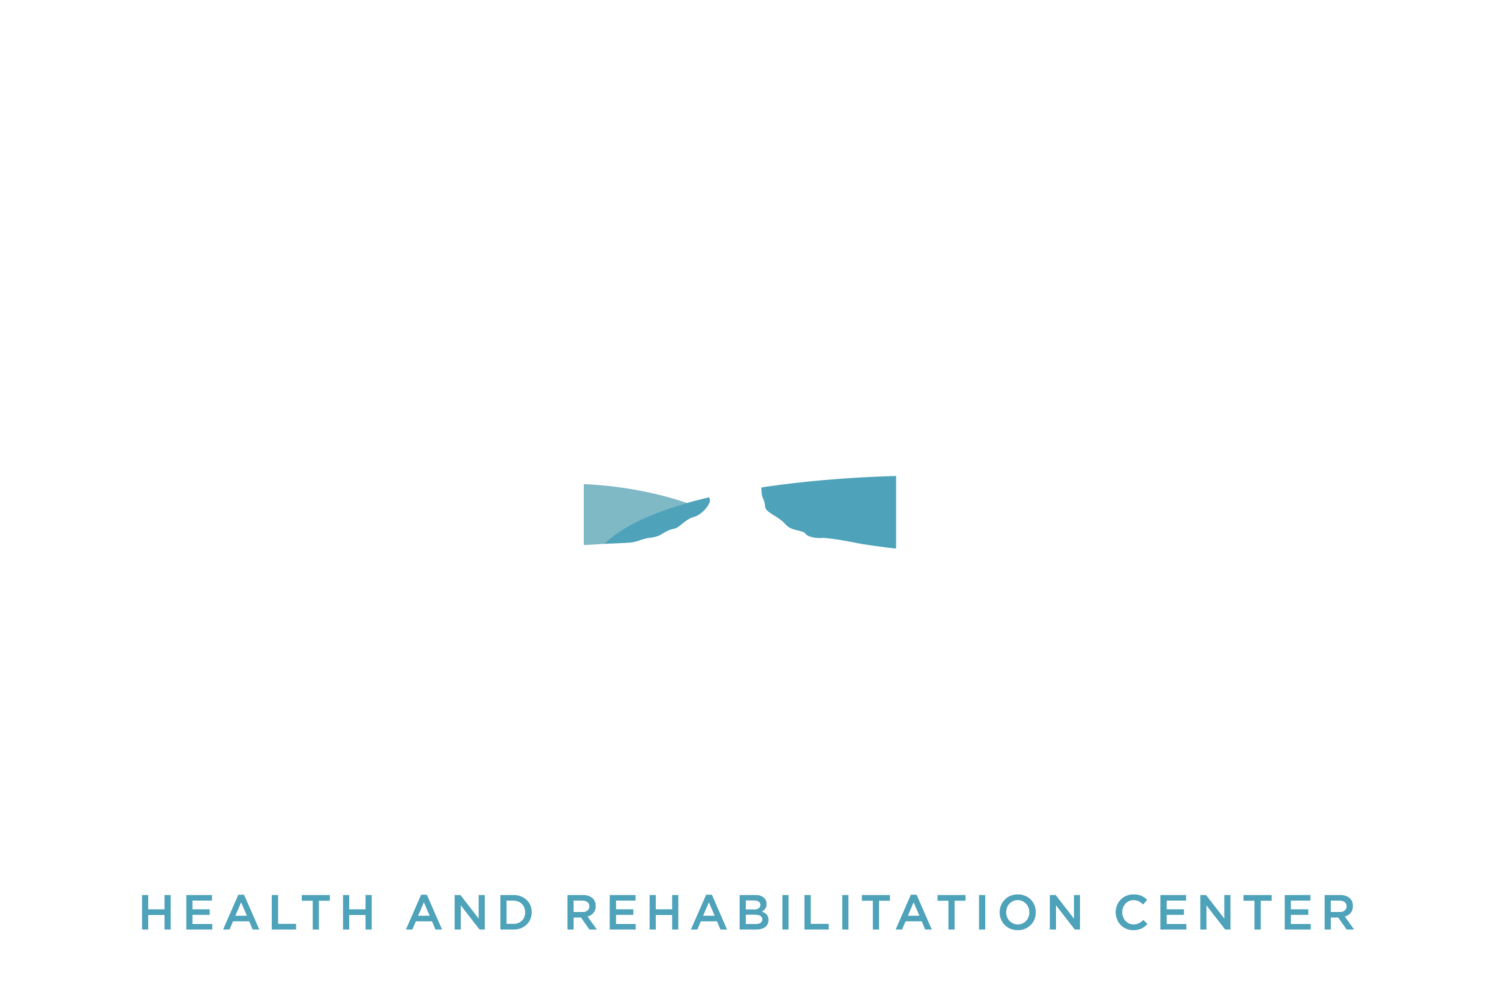 Huntington Drive Health and Rehabilitation Center